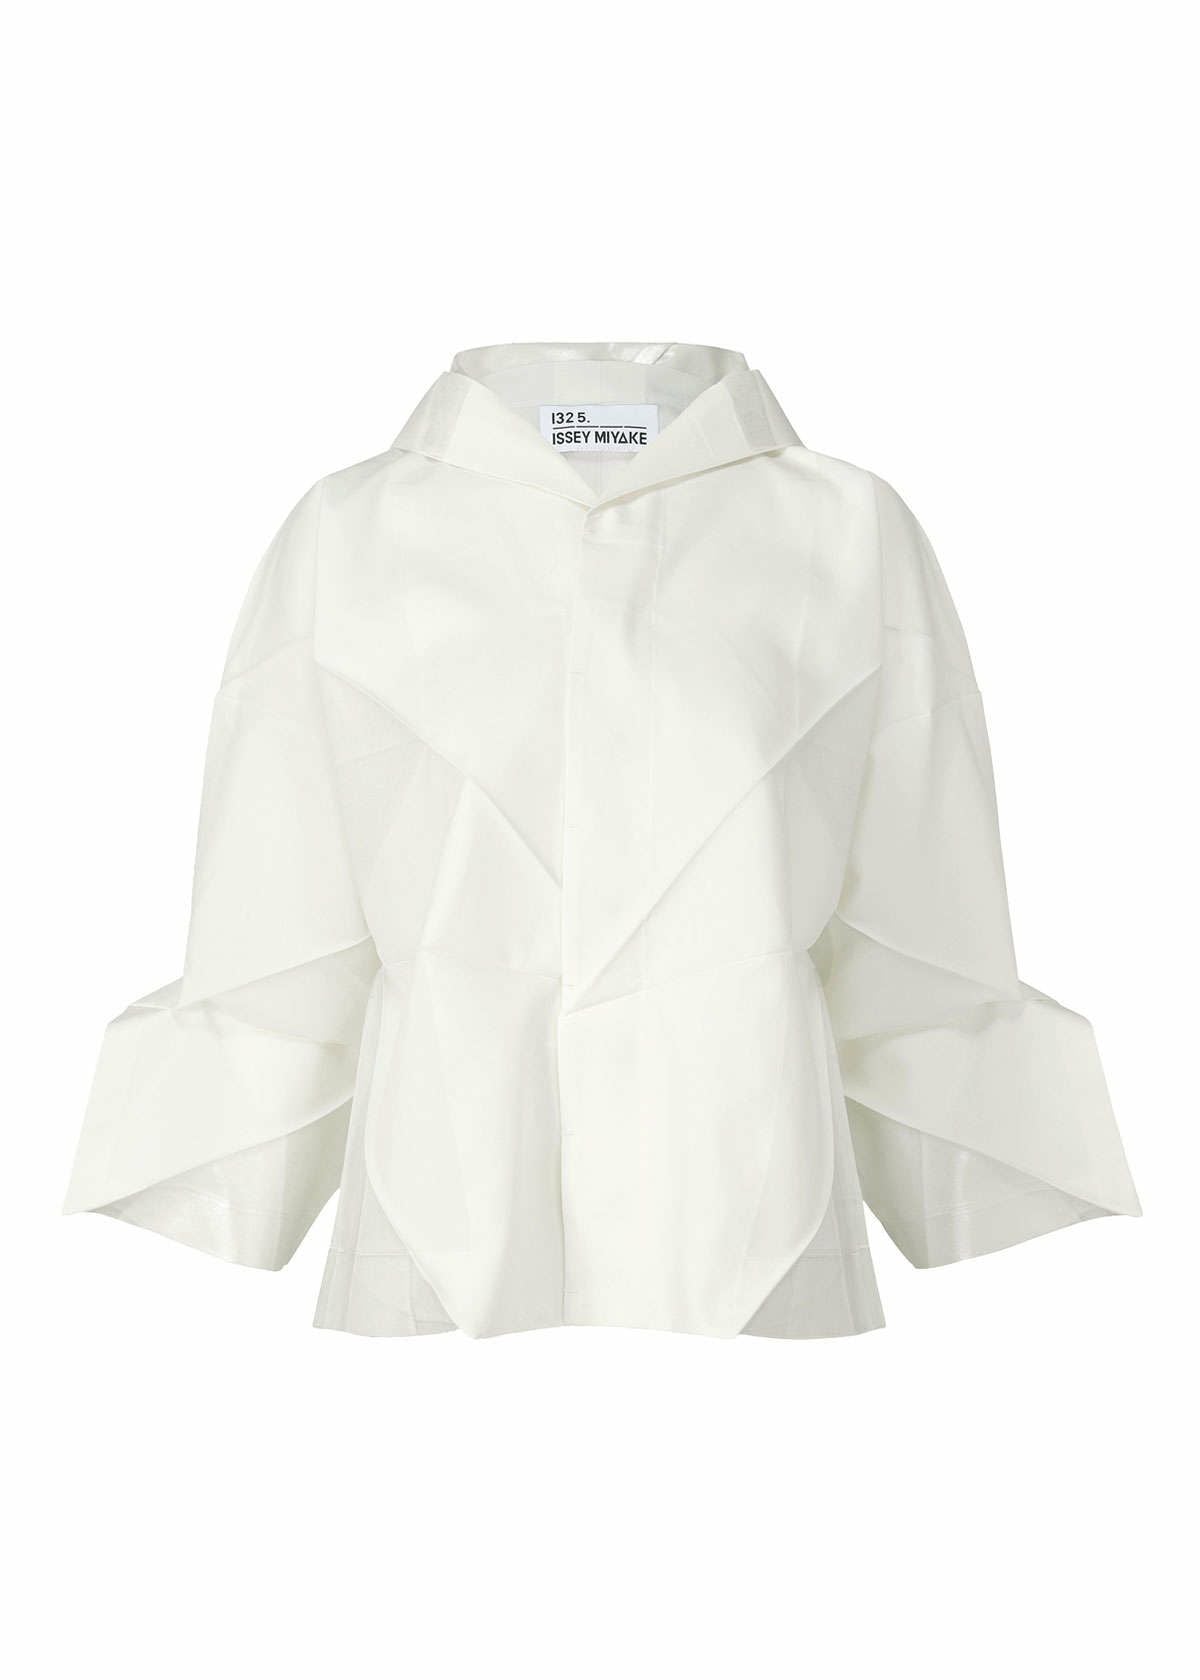 132 5. STANDARD Jacket White x Silver | ISSEY MIYAKE ONLINE STORE UK